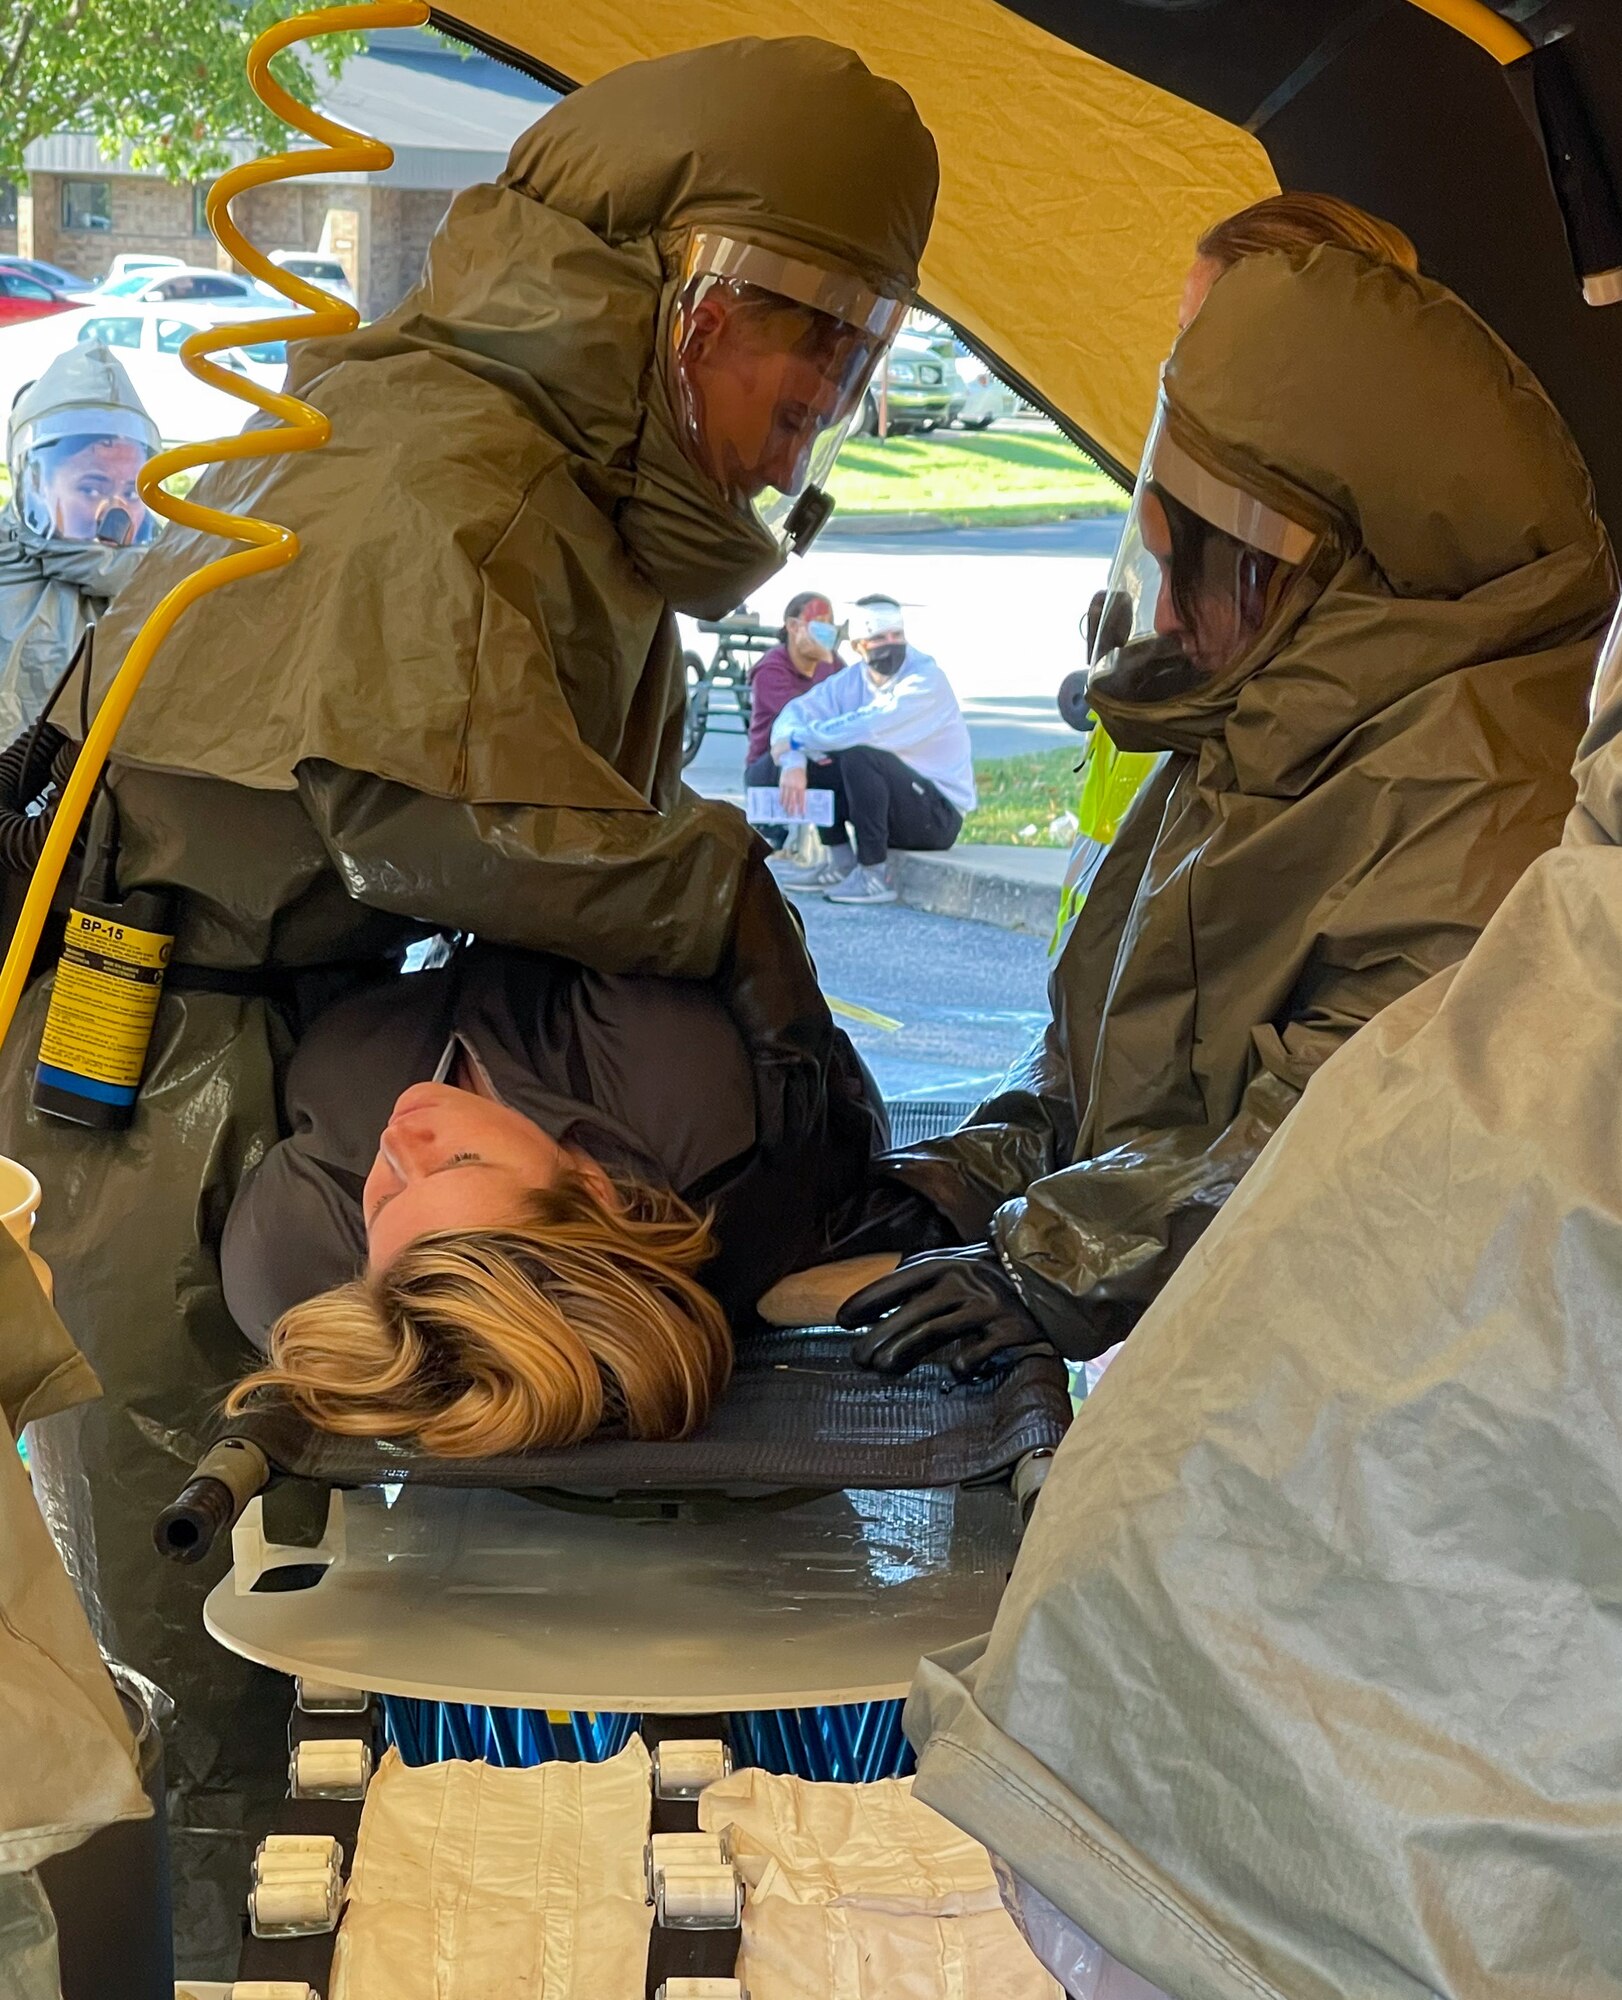 Medics in hazmat gear treat patient